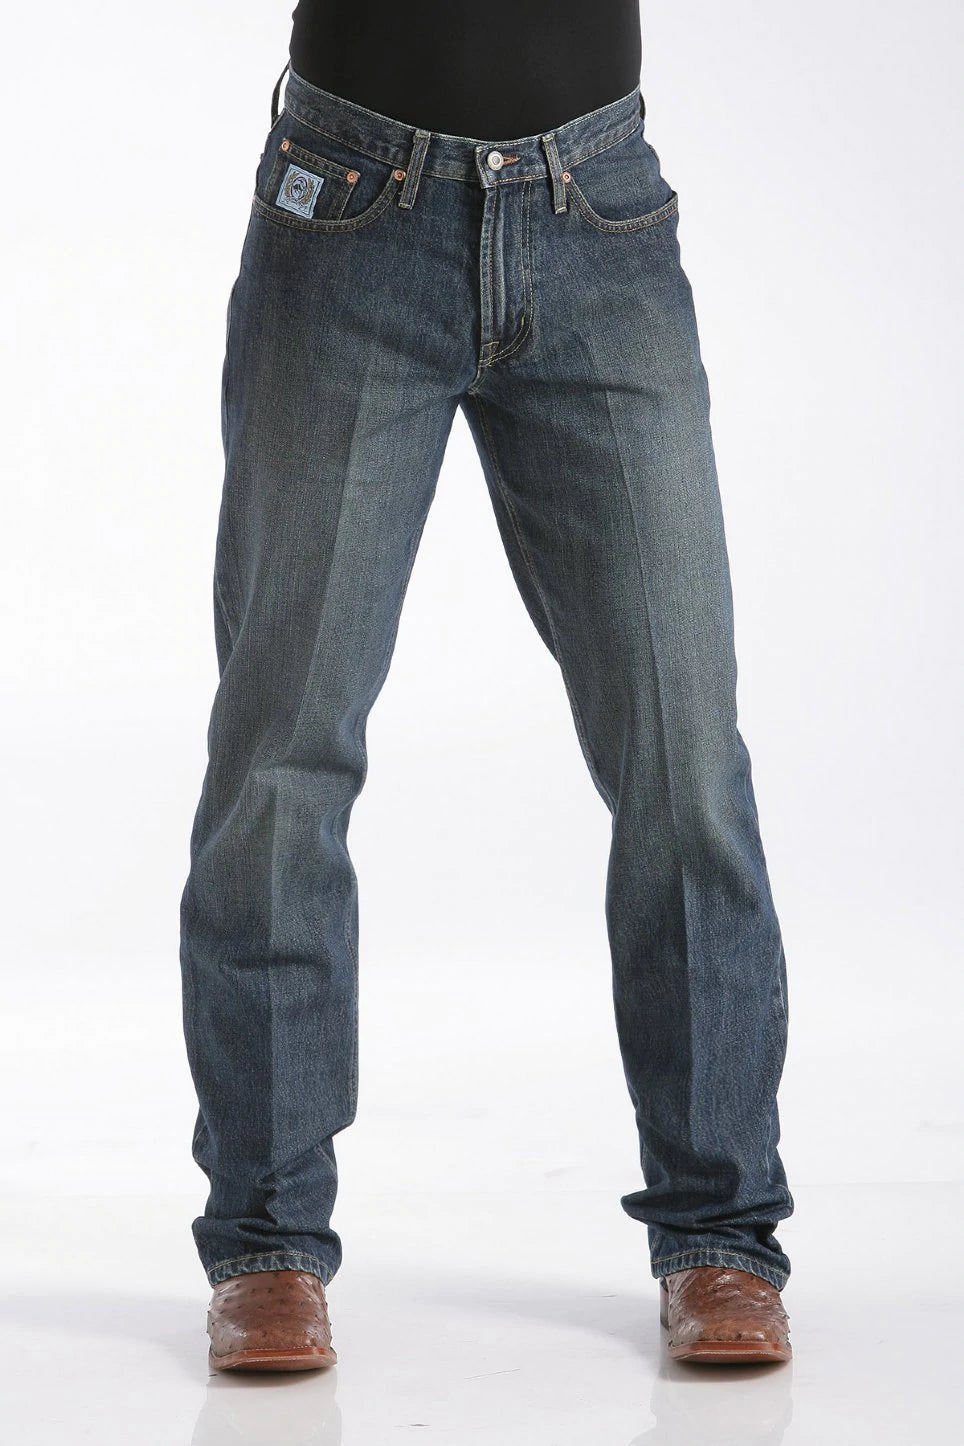 Cinch | Mens | Jeans | Straight | 34" | White Label | Dark-2